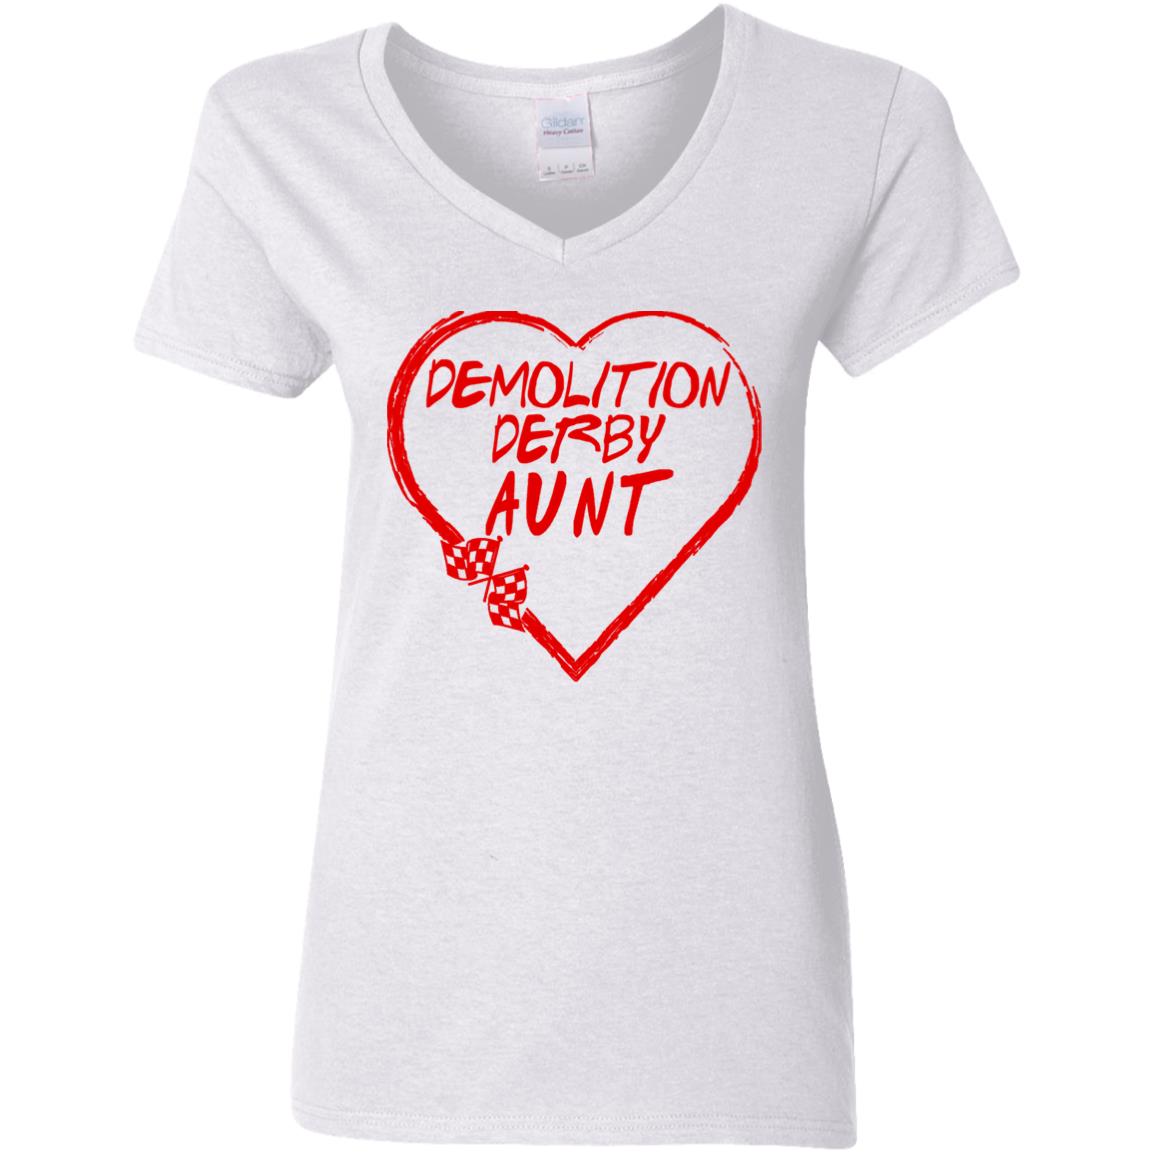 Demolition Derby Aunt Heart Ladies' 5.3 oz. V-Neck T-Shirt